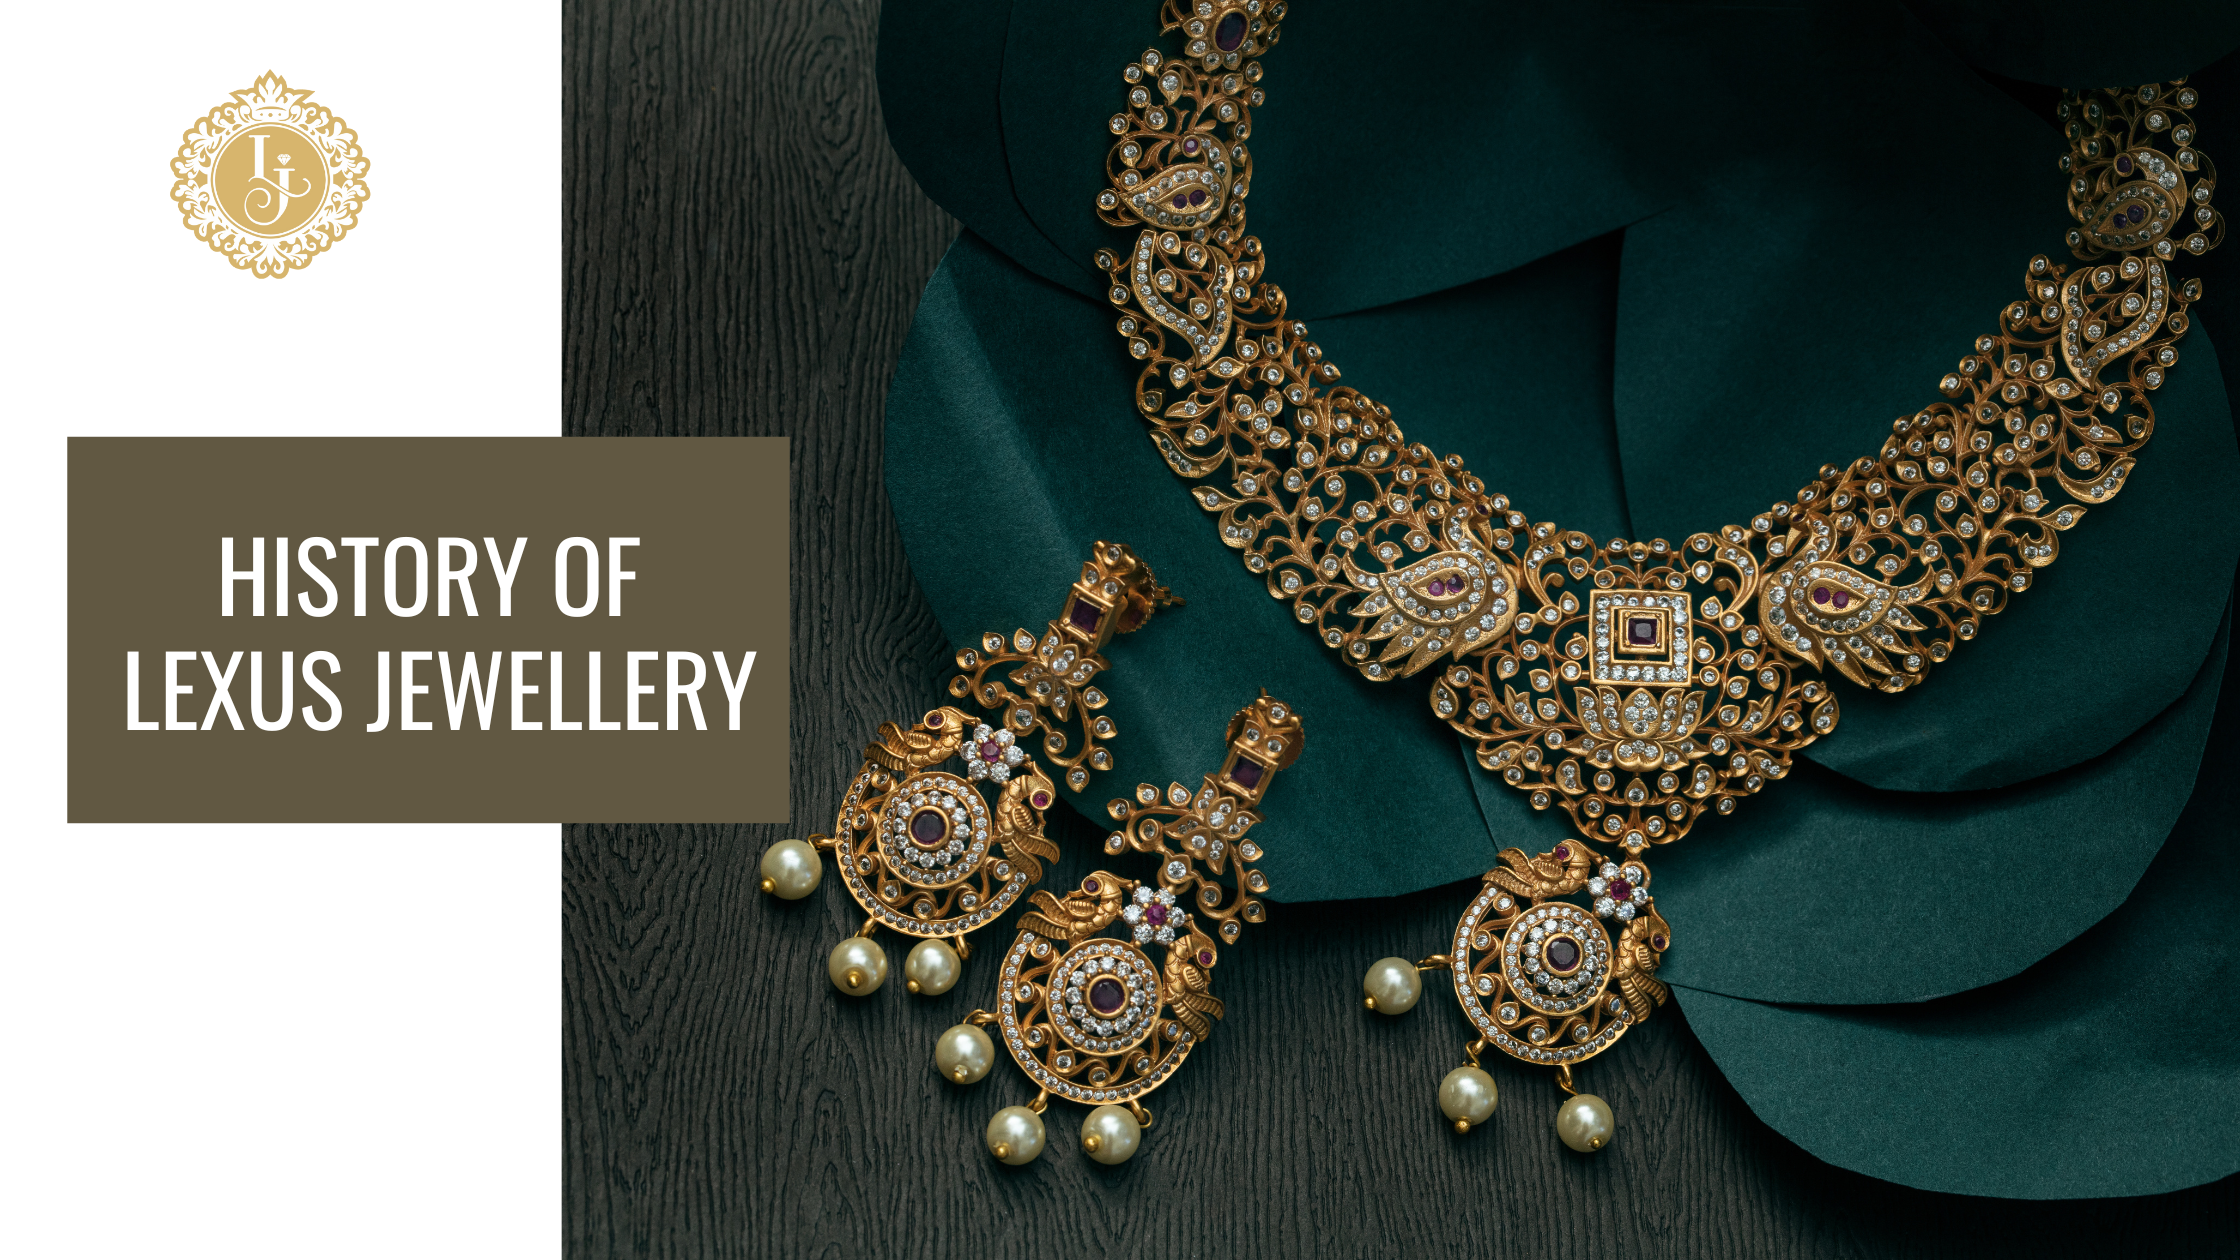 Wholesale imitation jewellery in begum bazar